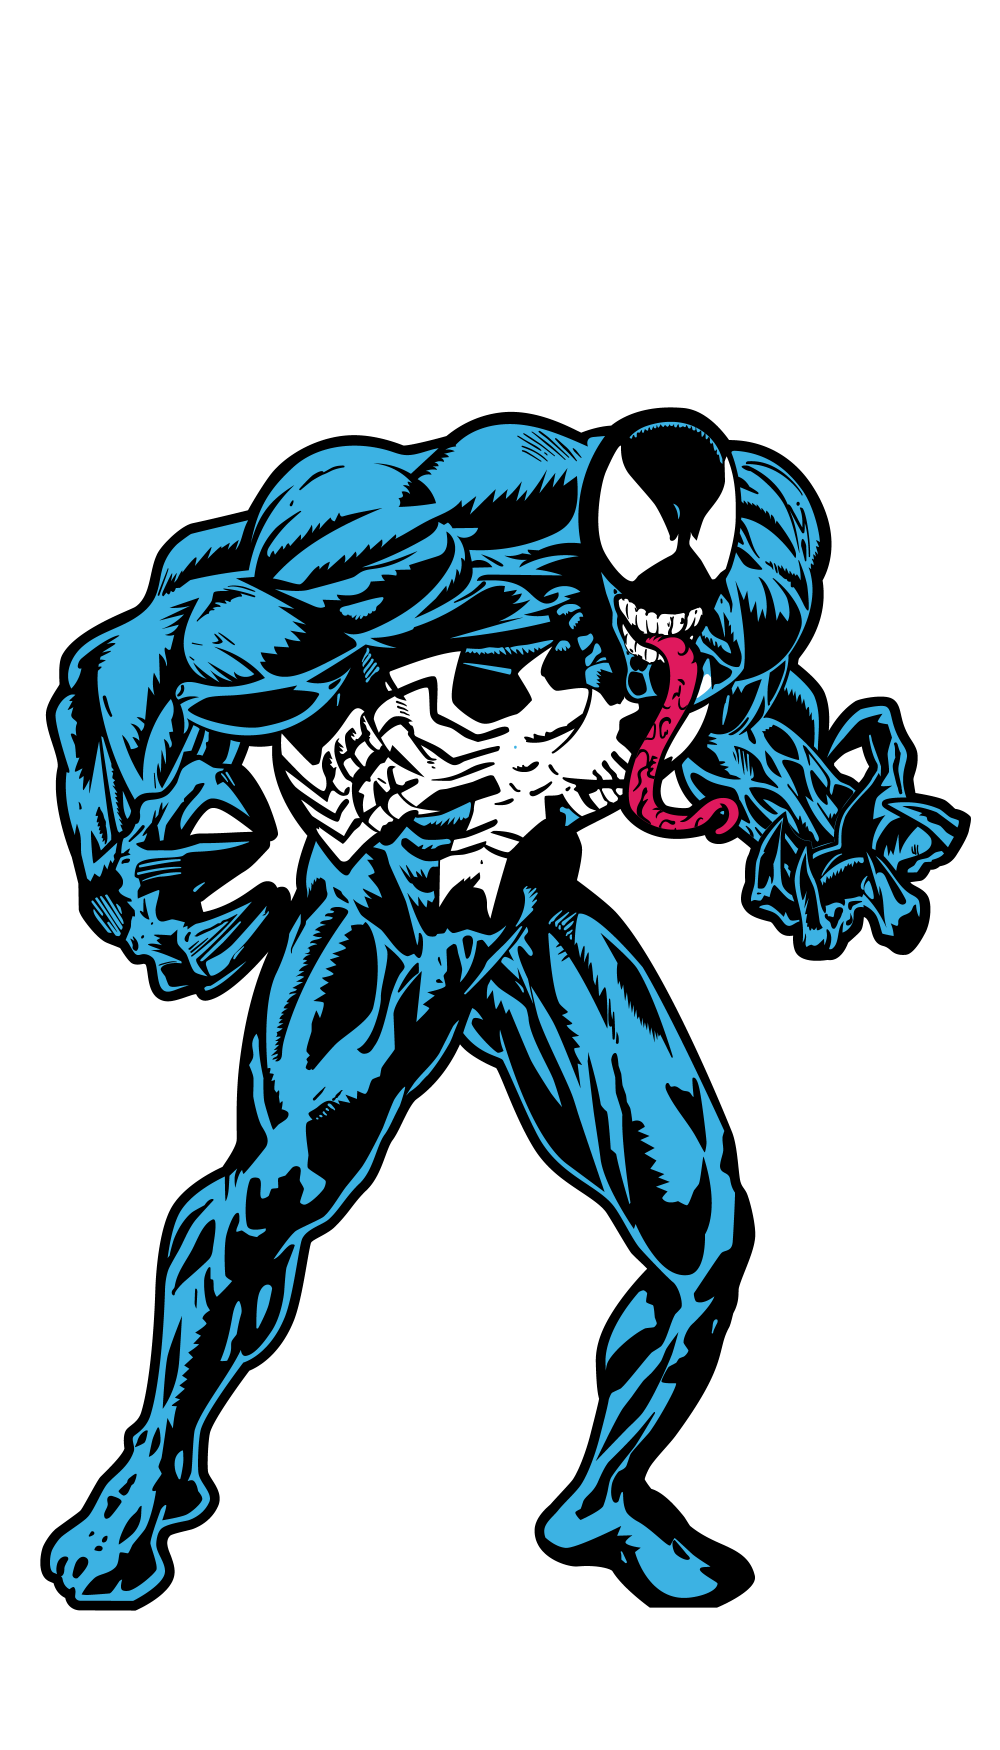 Venom (498)